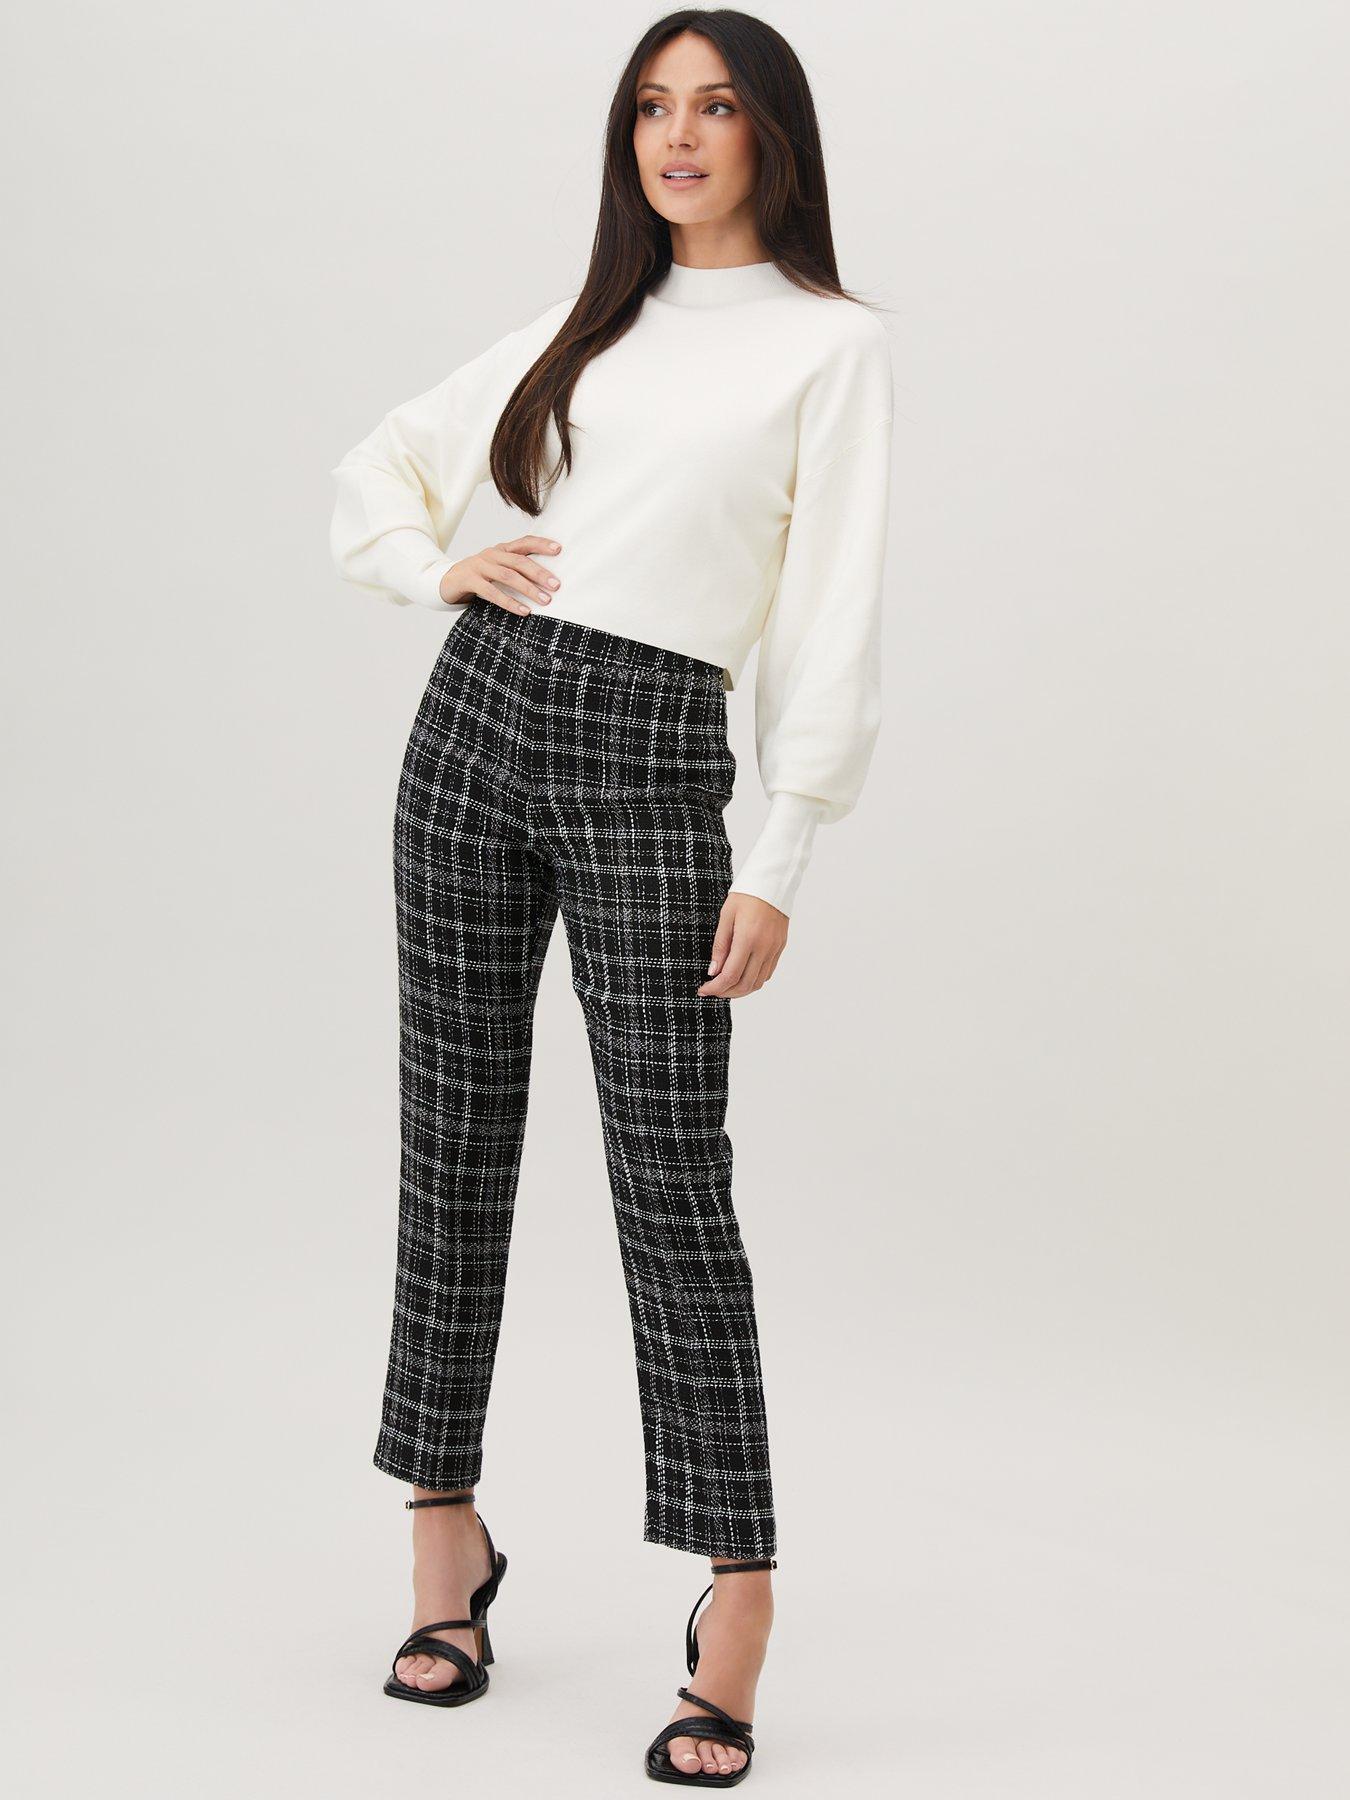 discount 63% Gray/Multicolored 38                  EU Mamalicious Chino trouser WOMEN FASHION Trousers Elegant 